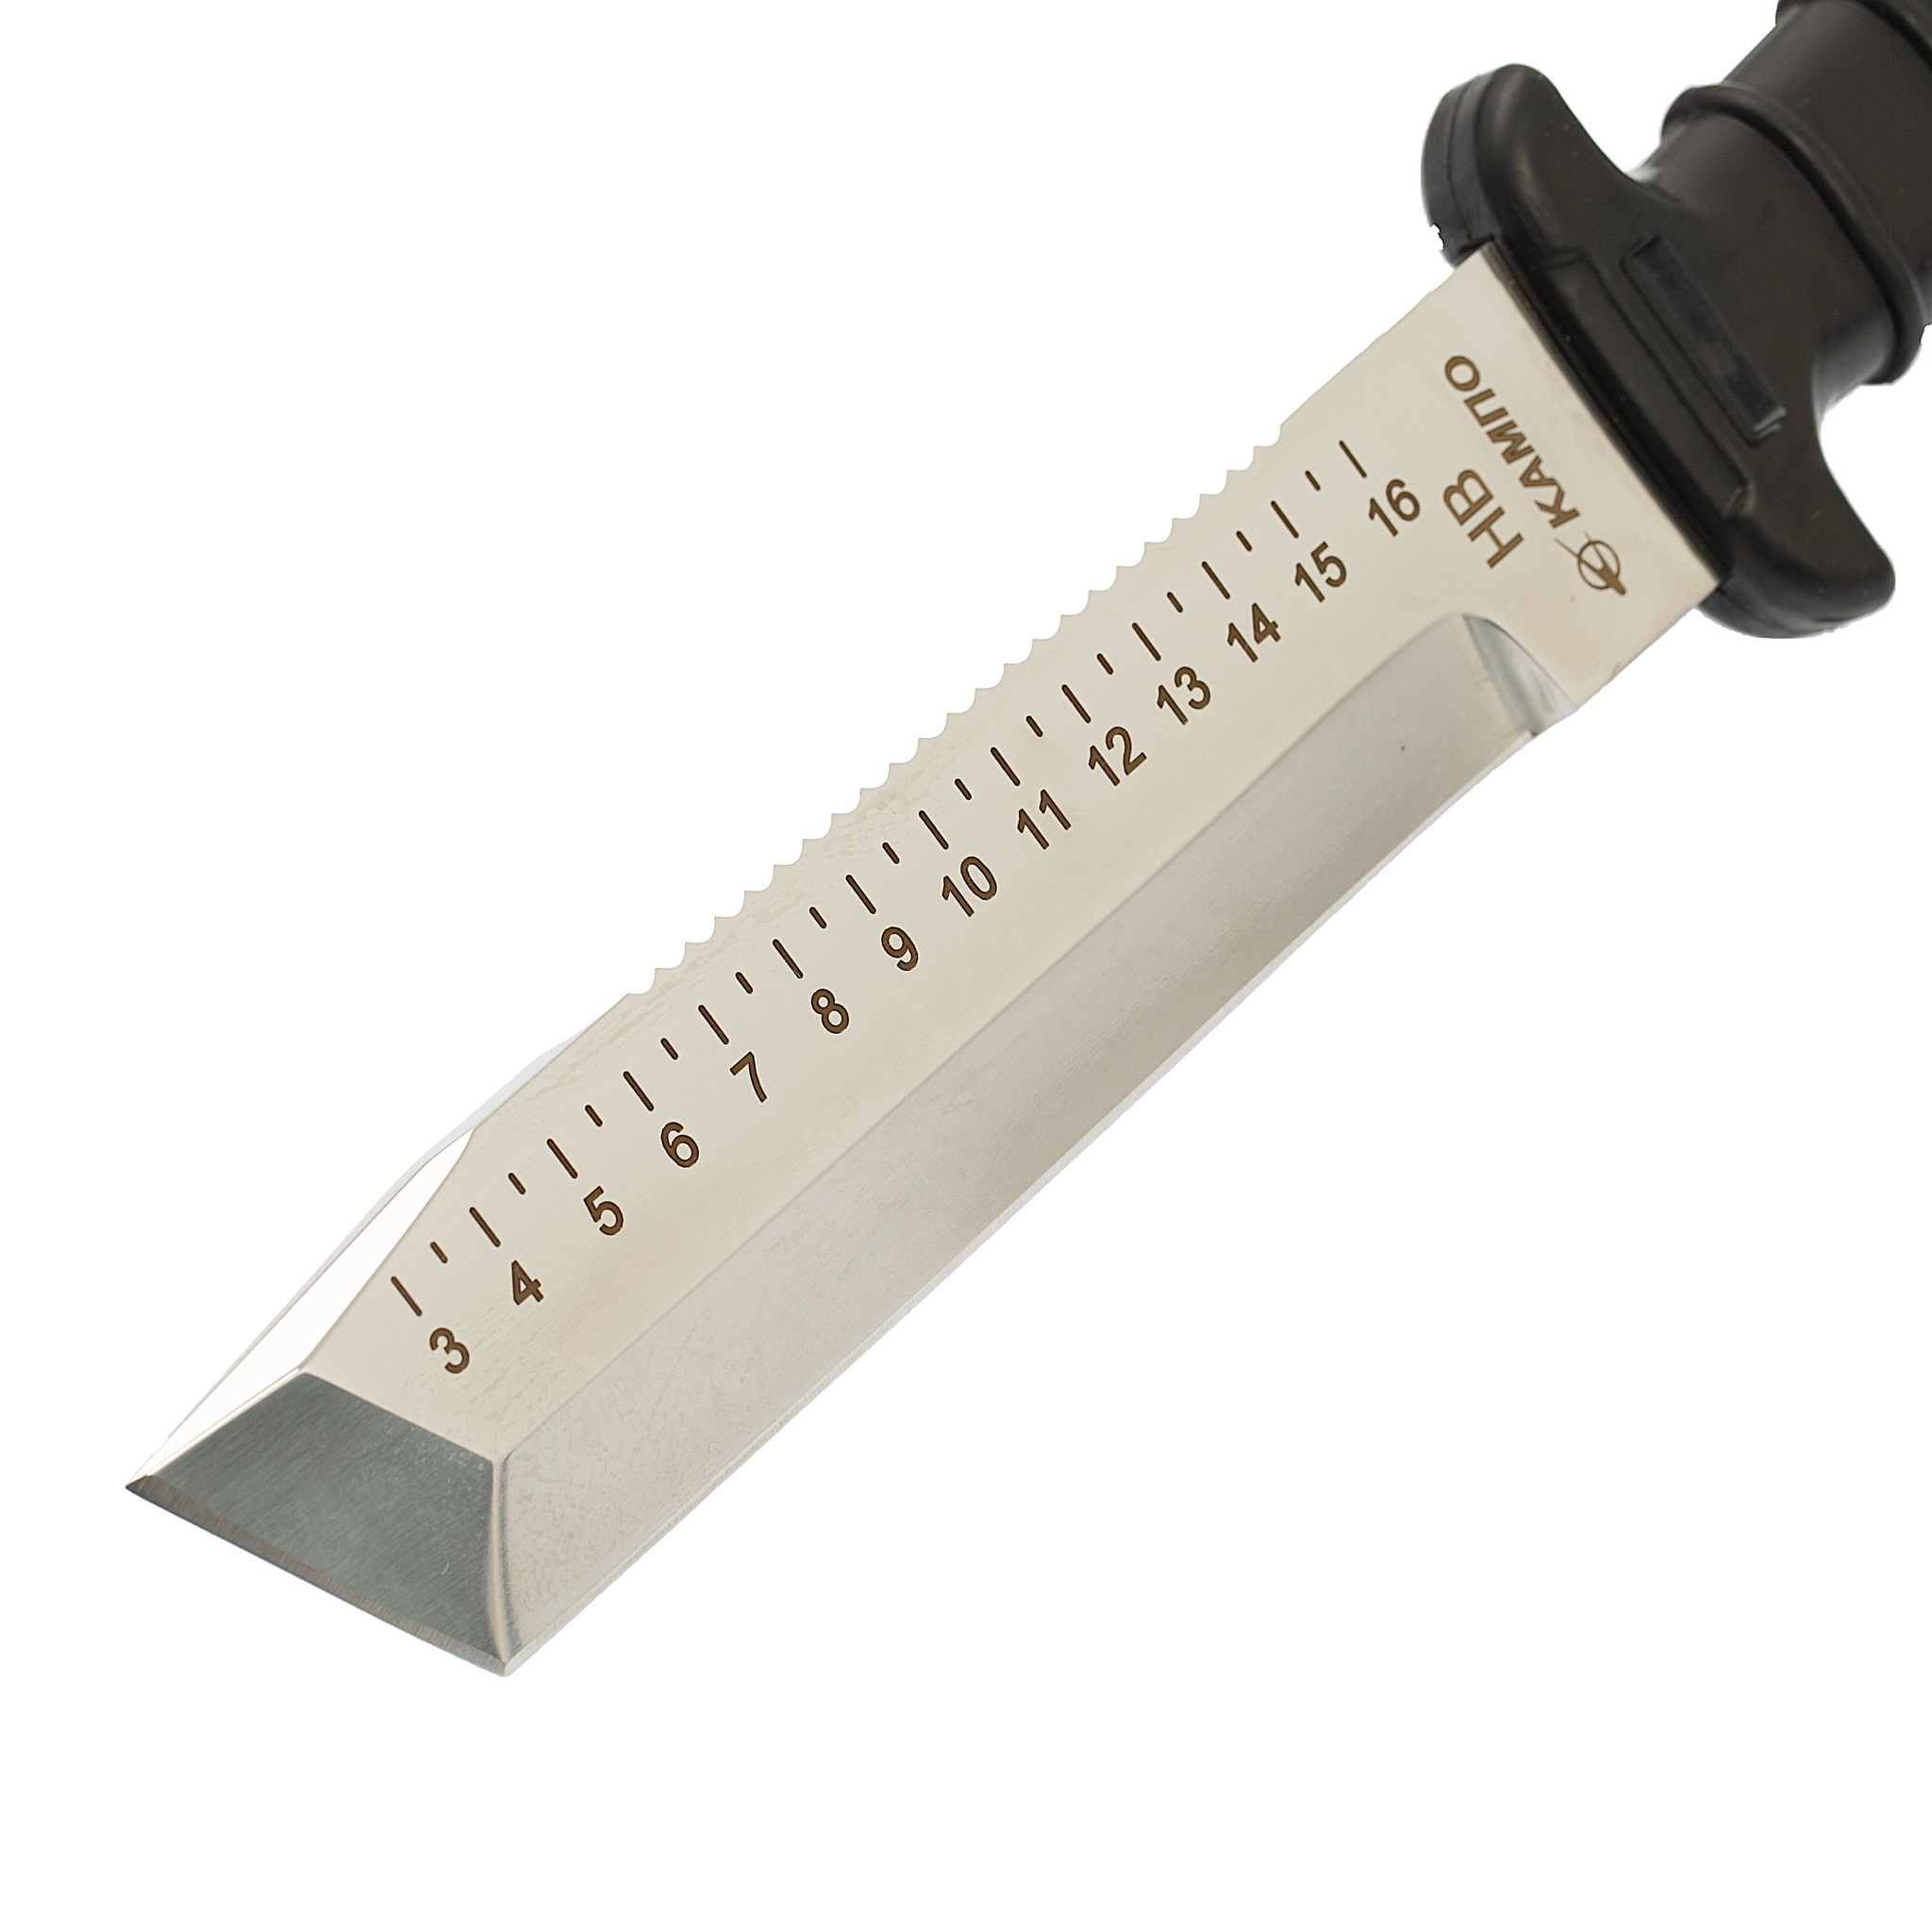 Нож водолазный НР, сталь 95х18, рукоять термоэластопласт, пластиковые ножны - фото 2